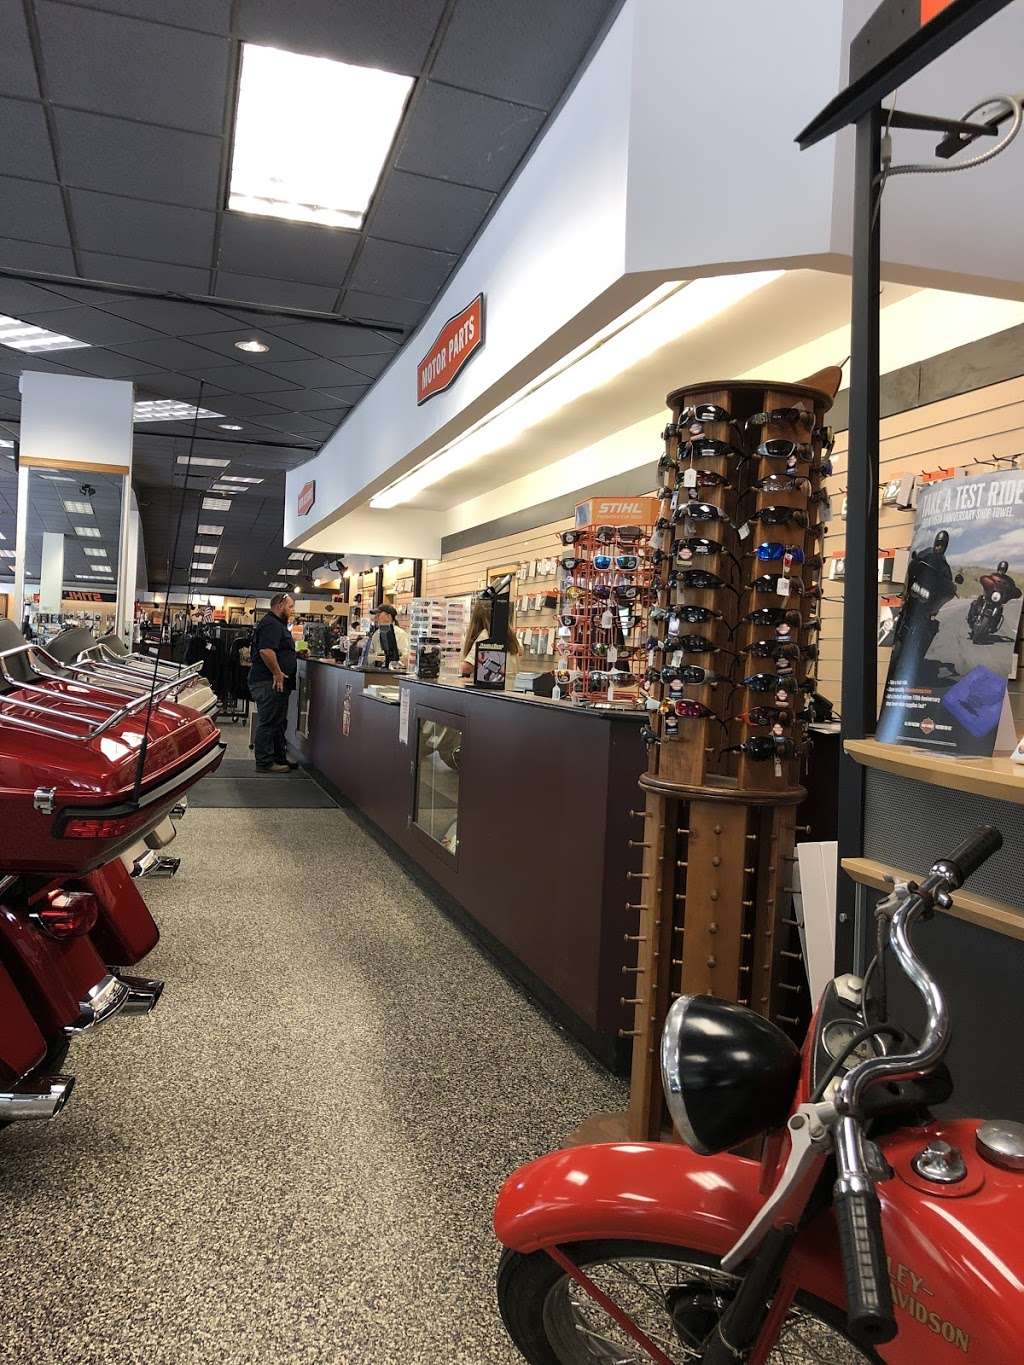 Baer Sport Center Harley-Davidson and Polaris | 330 Grandview Ave, Honesdale, PA 18431, USA | Phone: (570) 253-2000